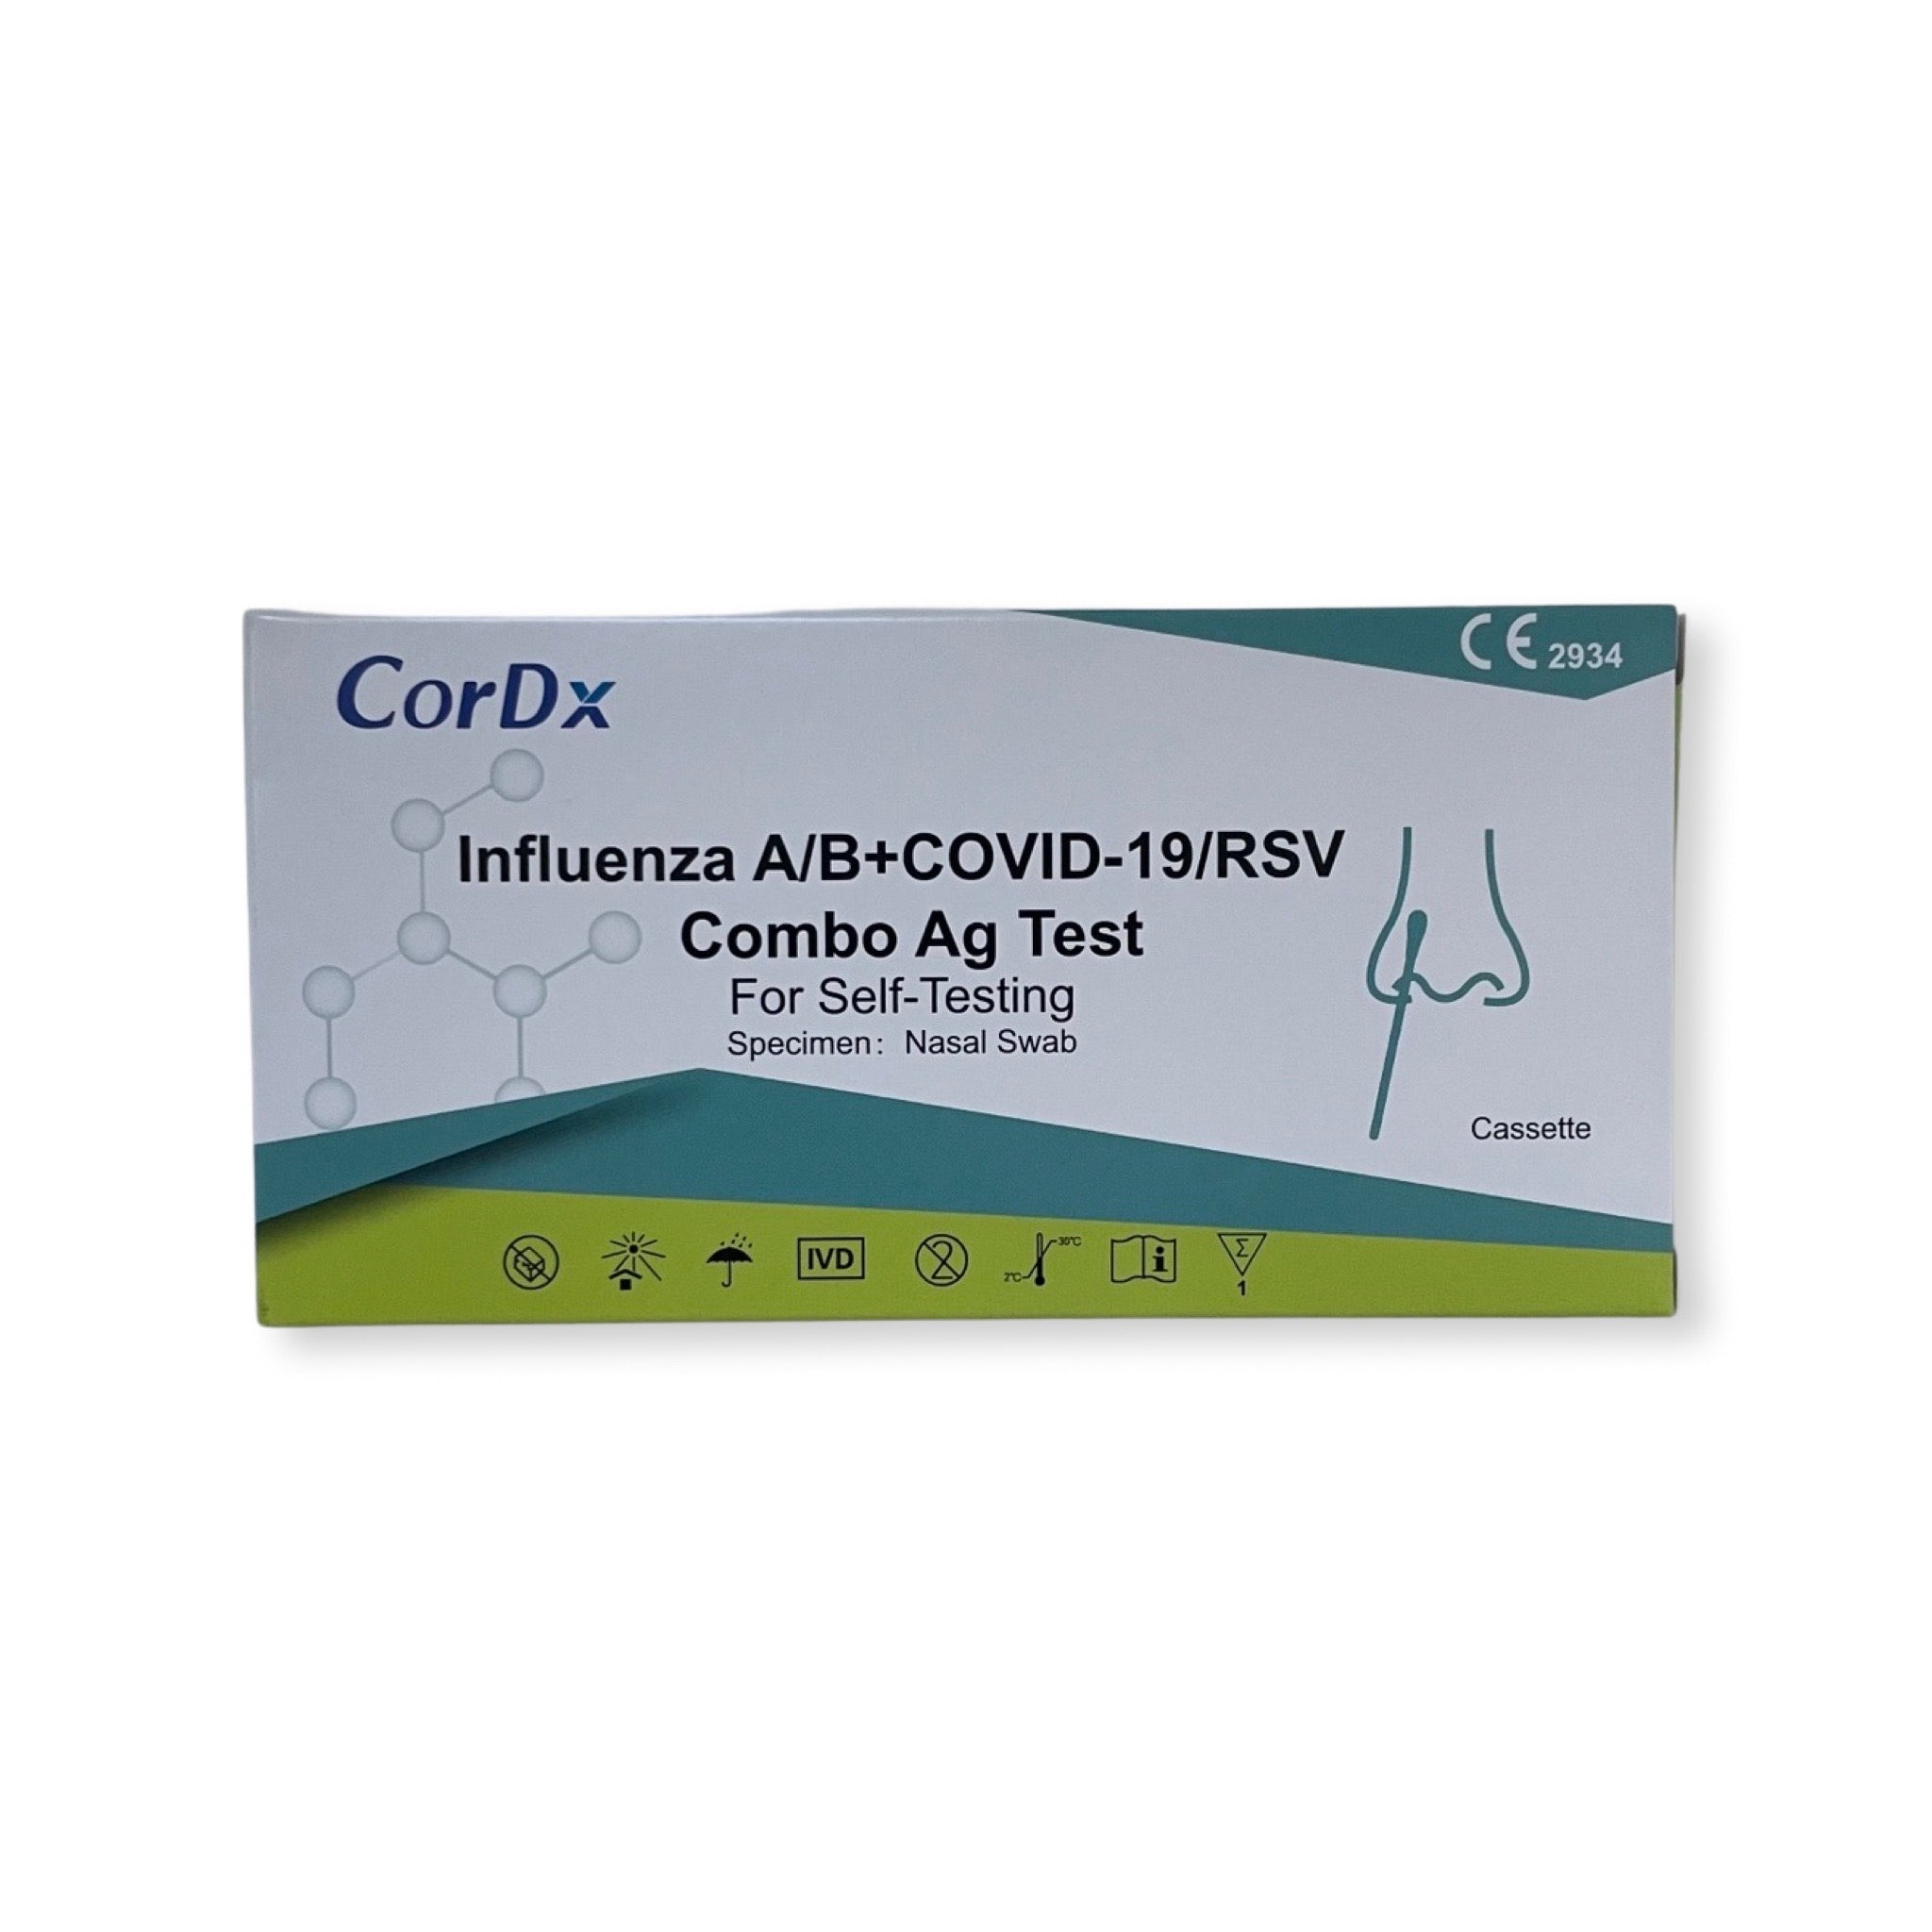 CorDx Influenza A/B+COVID-19/RSV Combo Ag Test